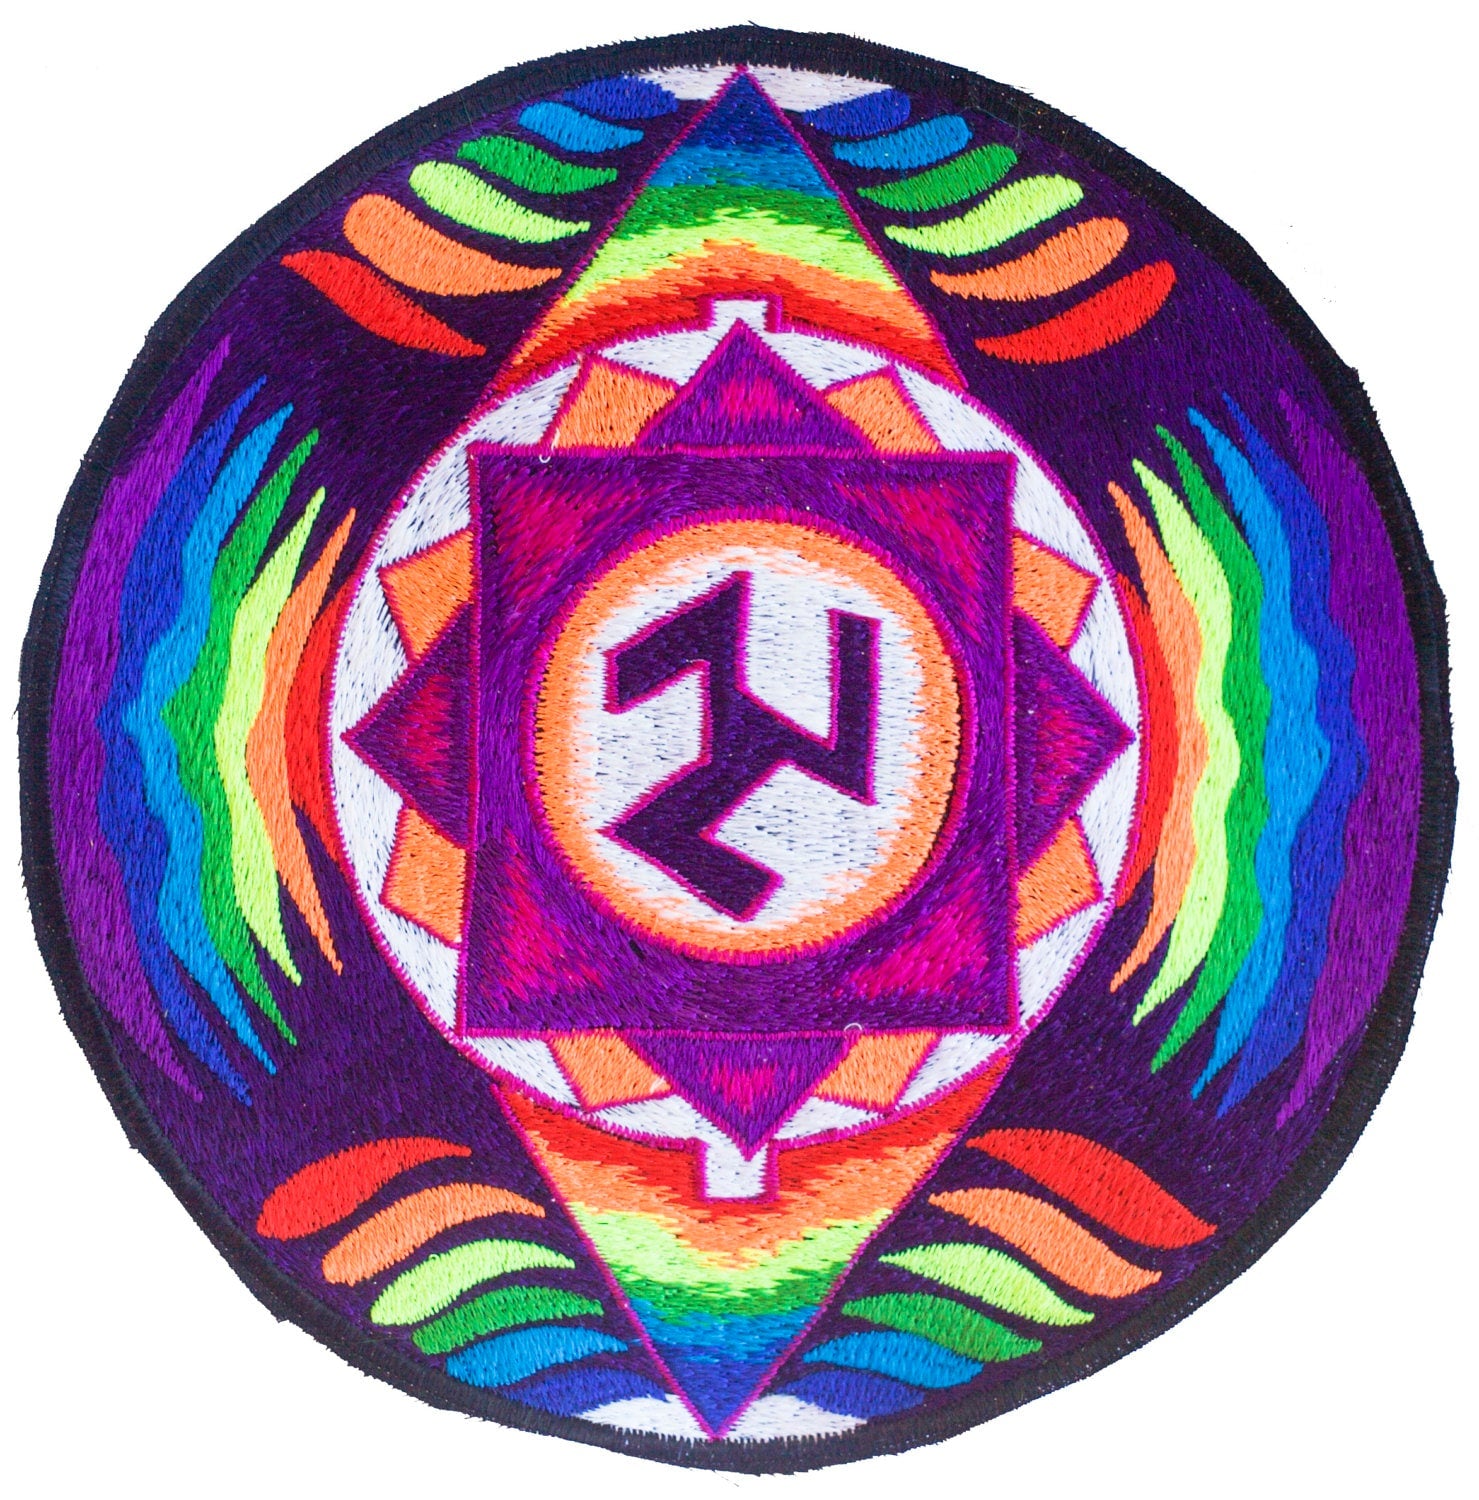 Antakarana Tribal Triskelion Rainbow Mandala - handmade psychedelic 7 inch embroidery patch sun wheel ancient symbol